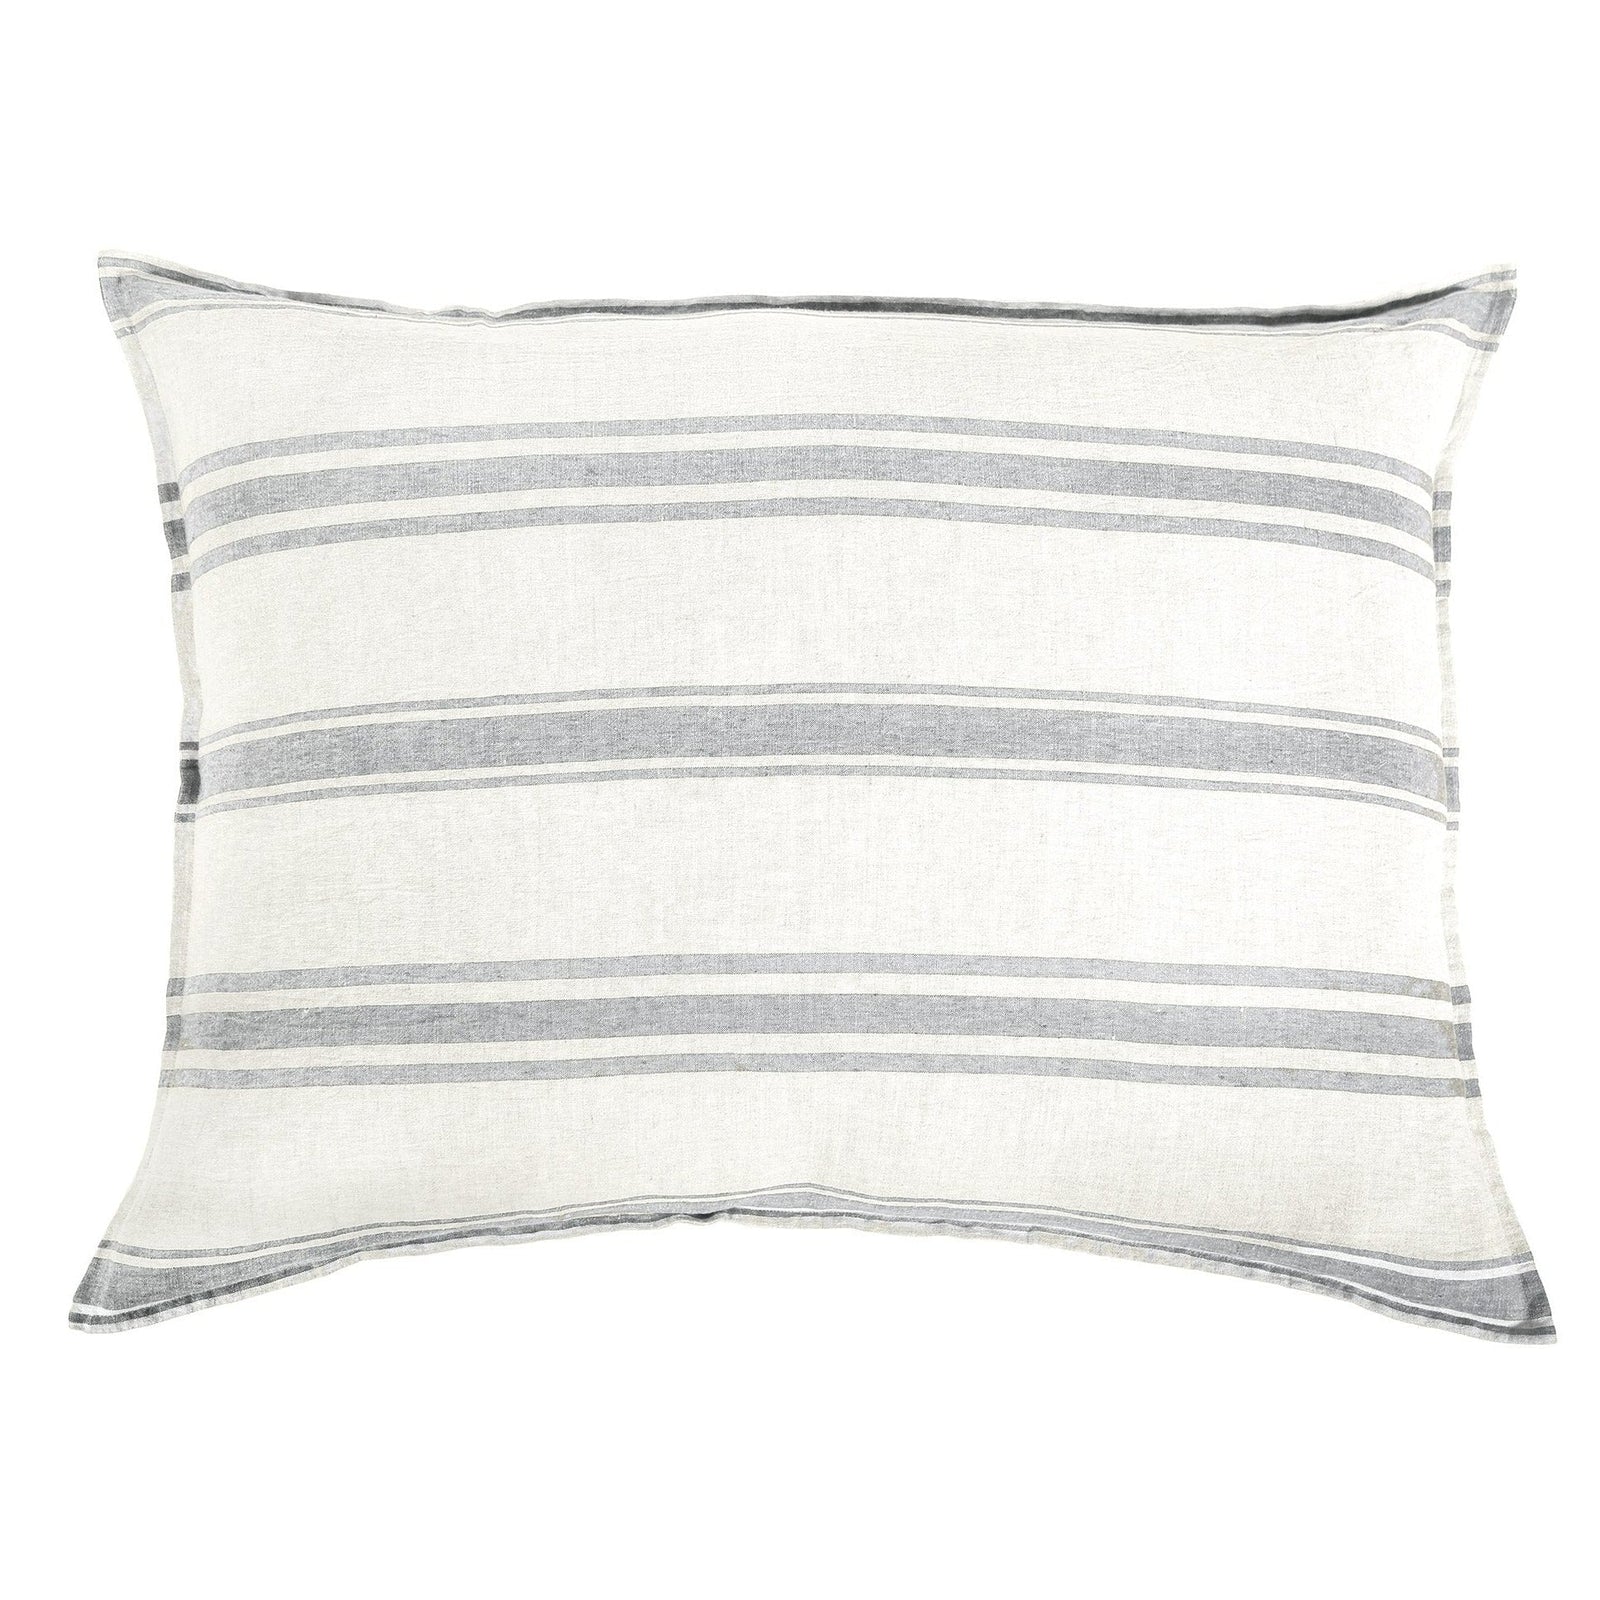 Jackson Cream/Grey Big Pillow by Pom at Home